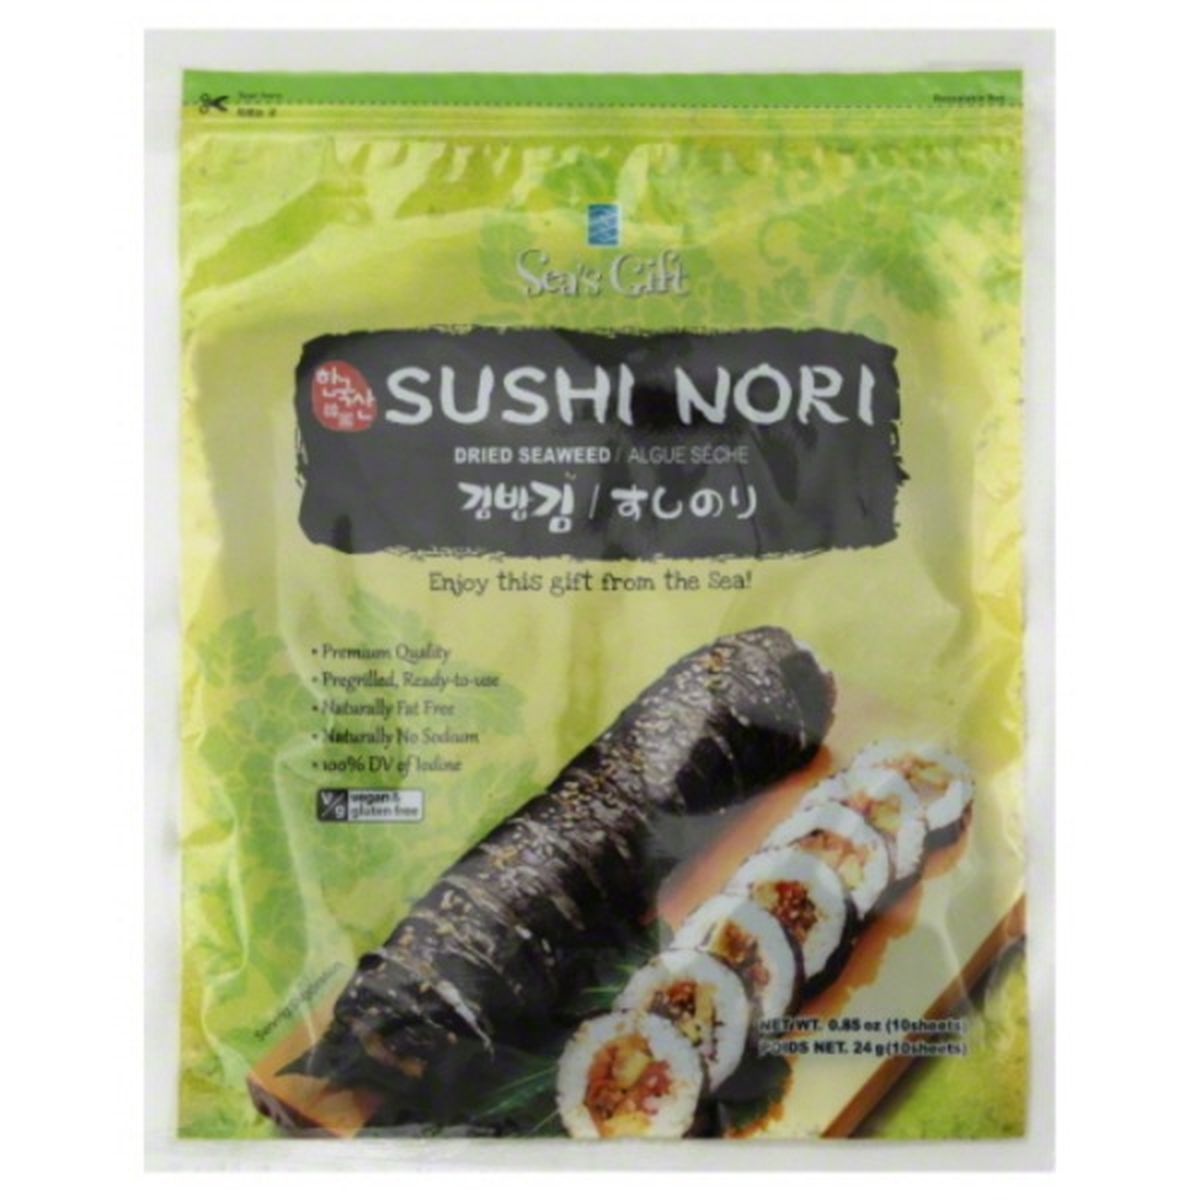 Calories in Seas Gift Sushi Nori